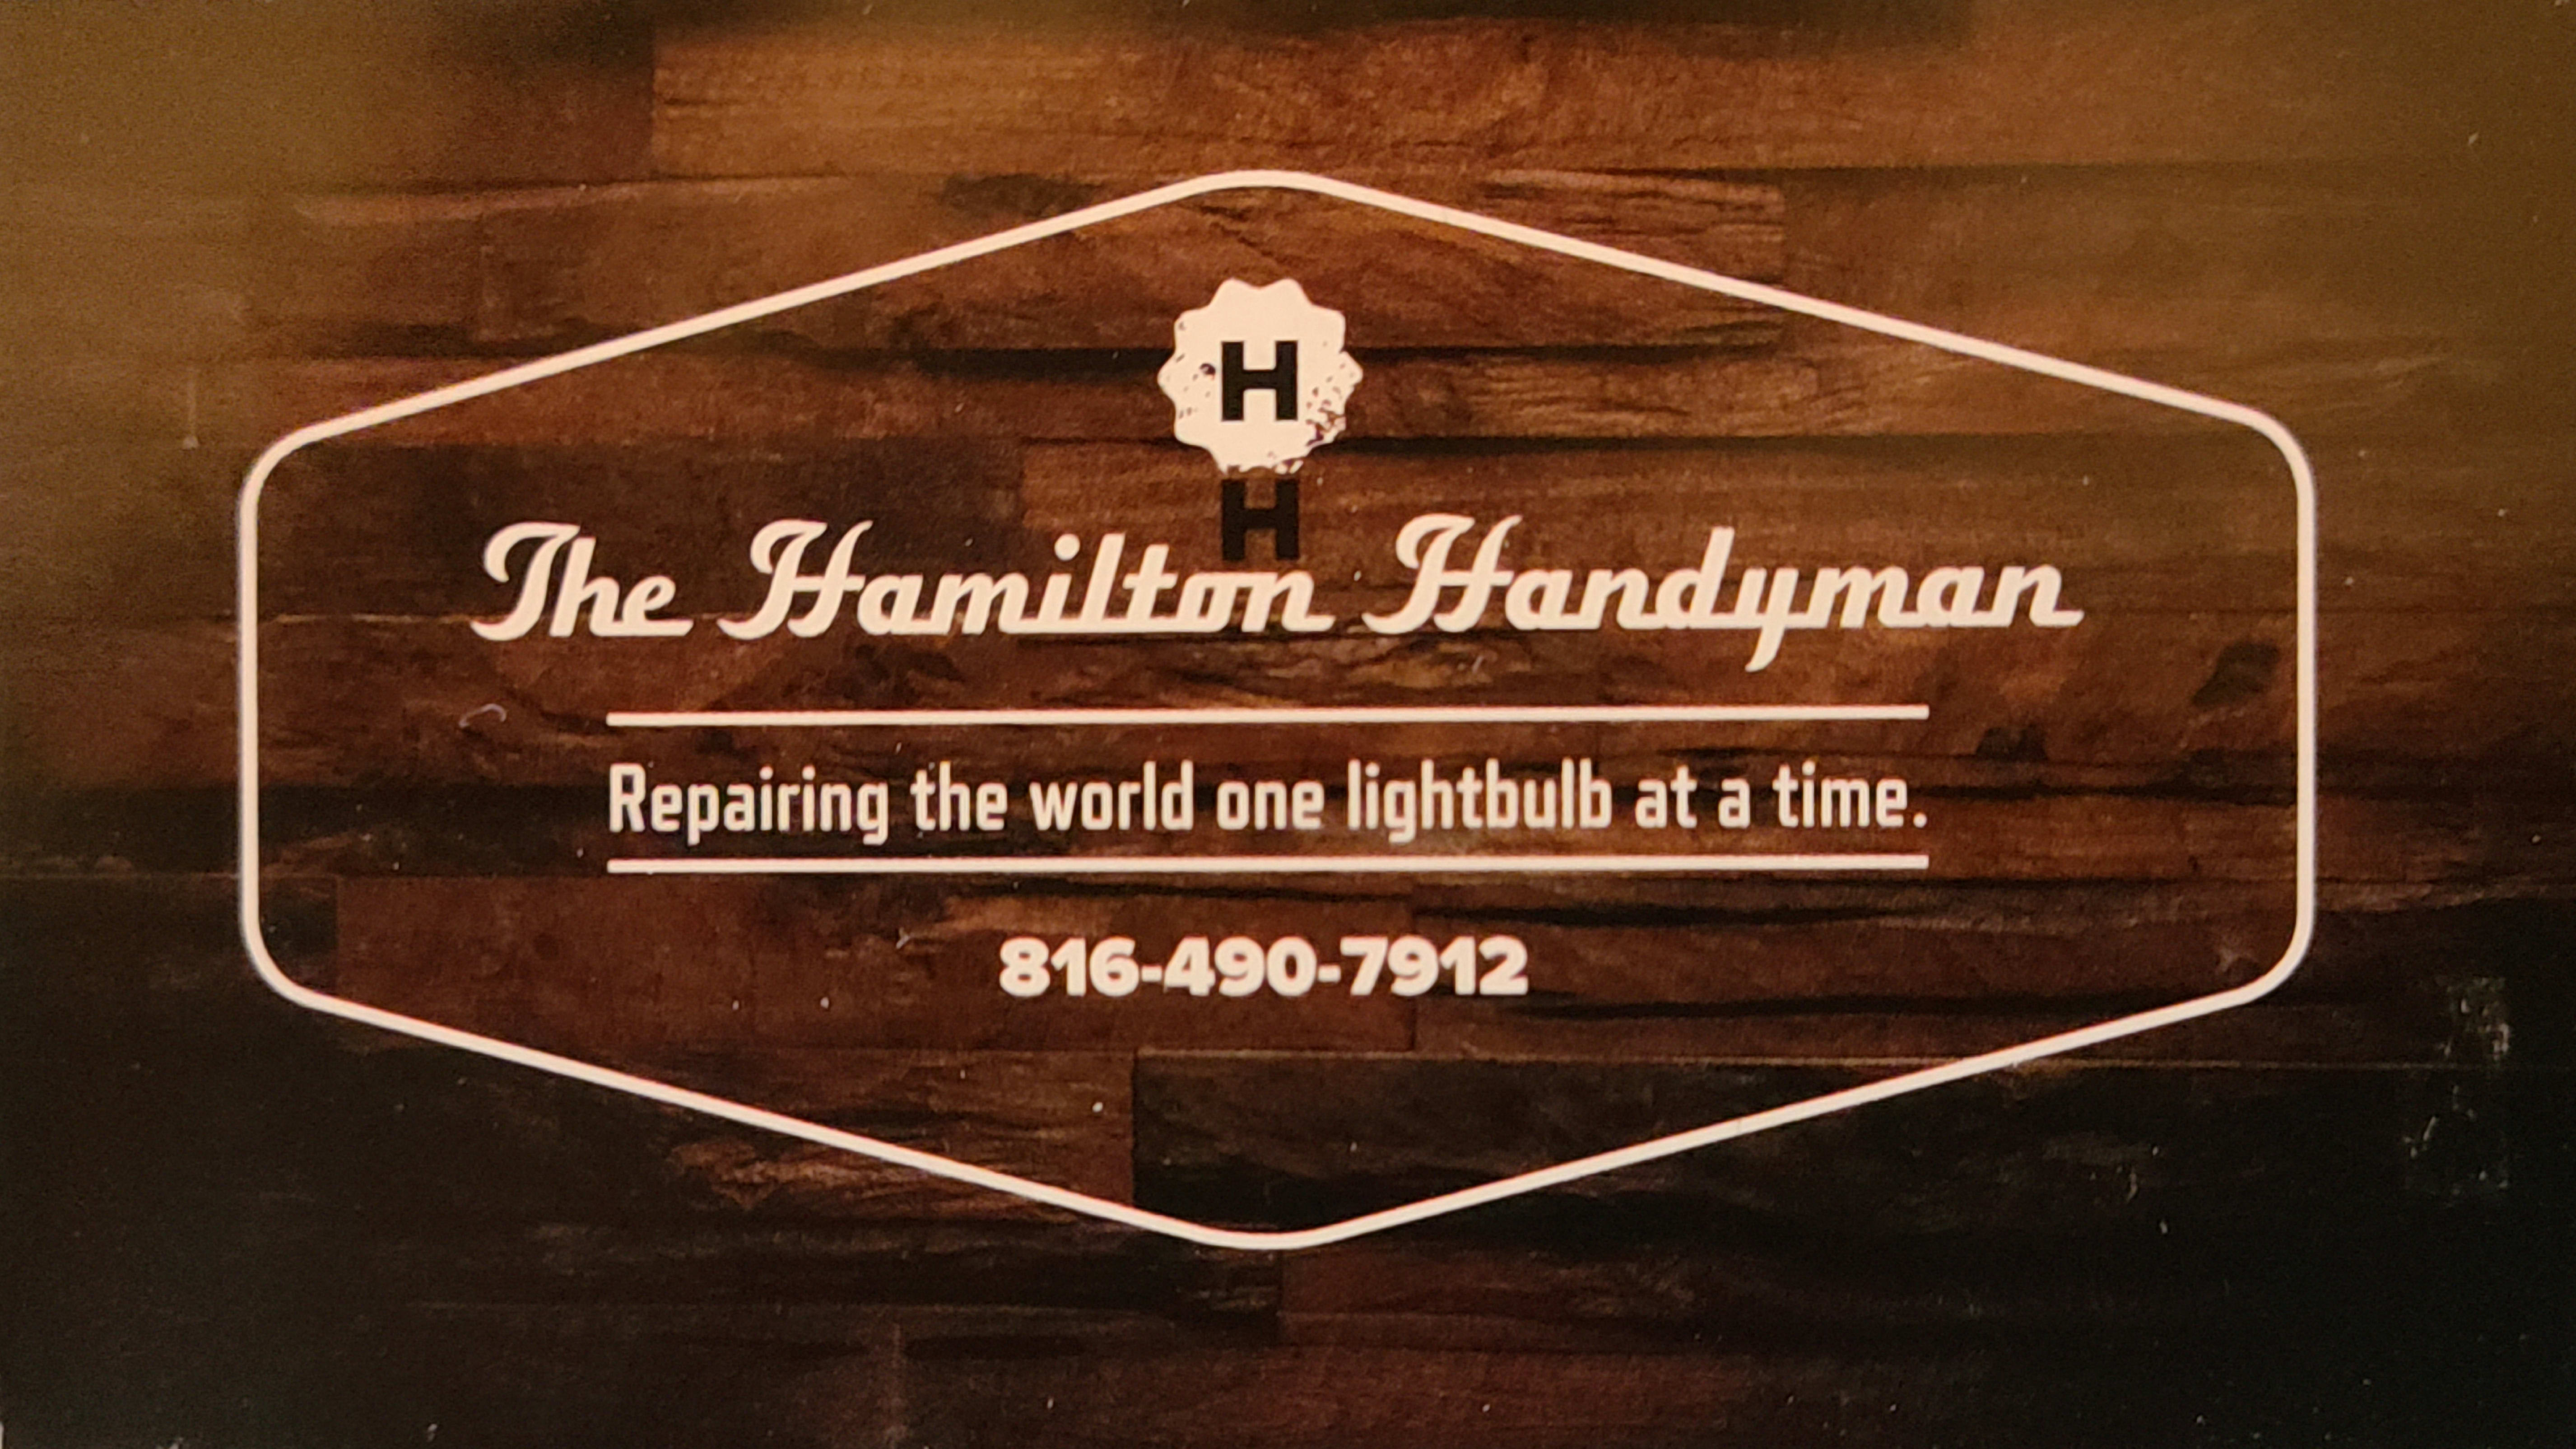 The Hamilton Handyman